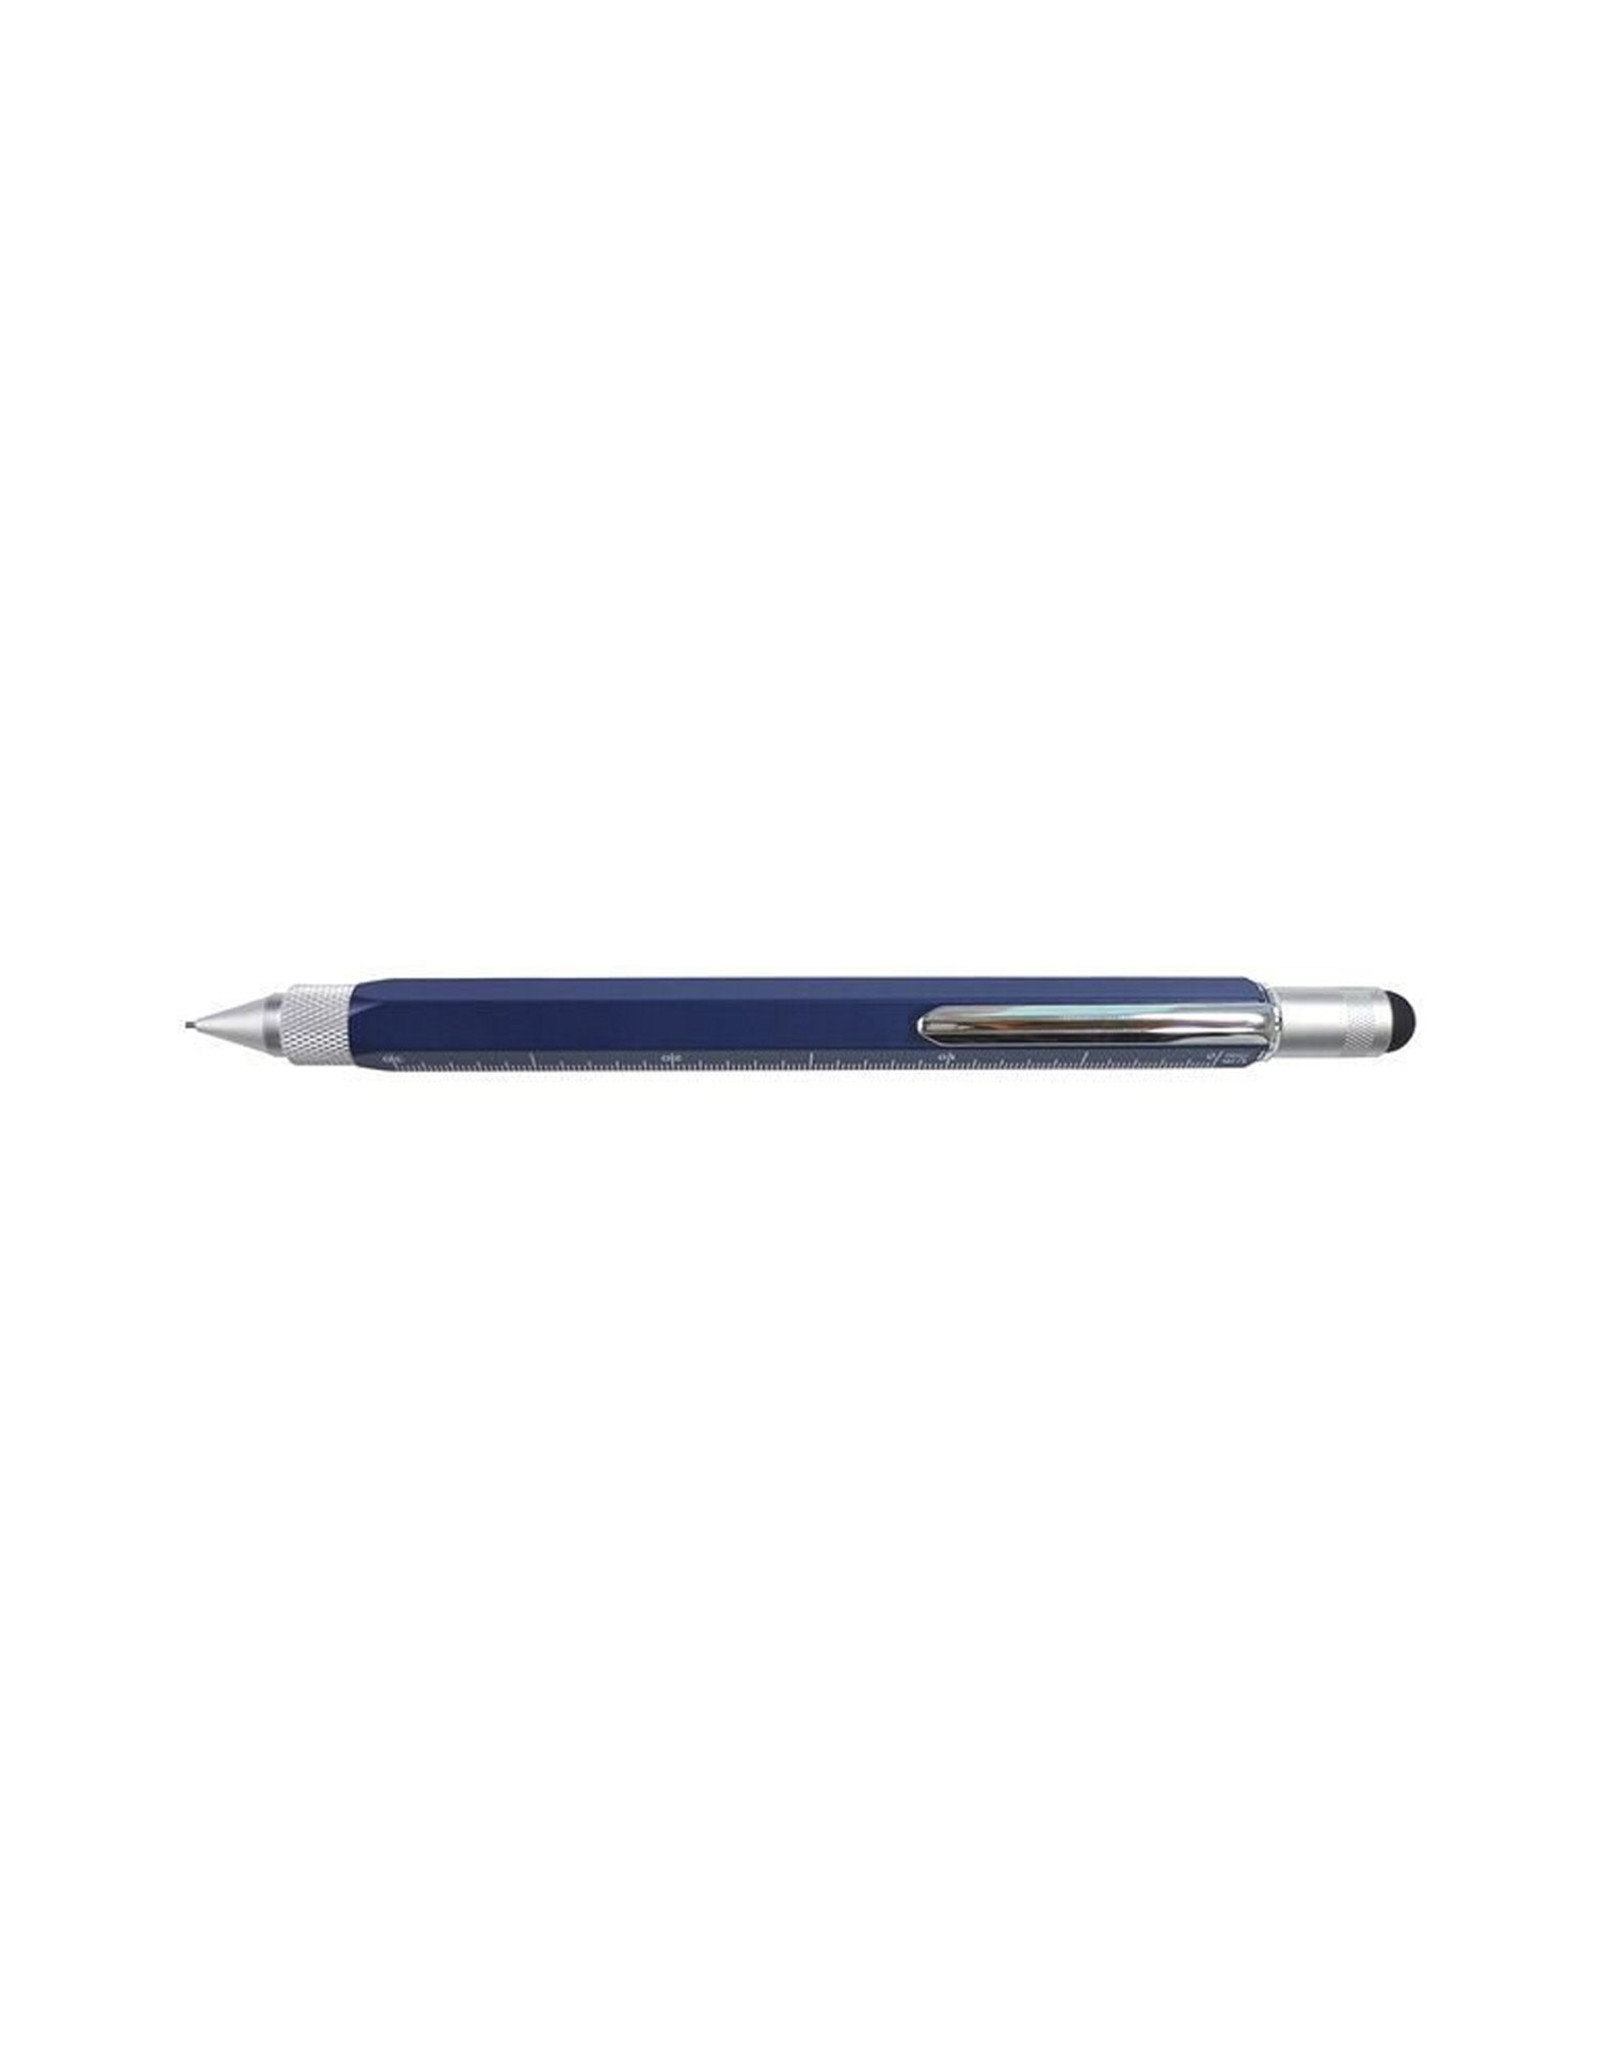 Monteverde One Touch Stylus Tool .9mm Pencil, Dark Blue